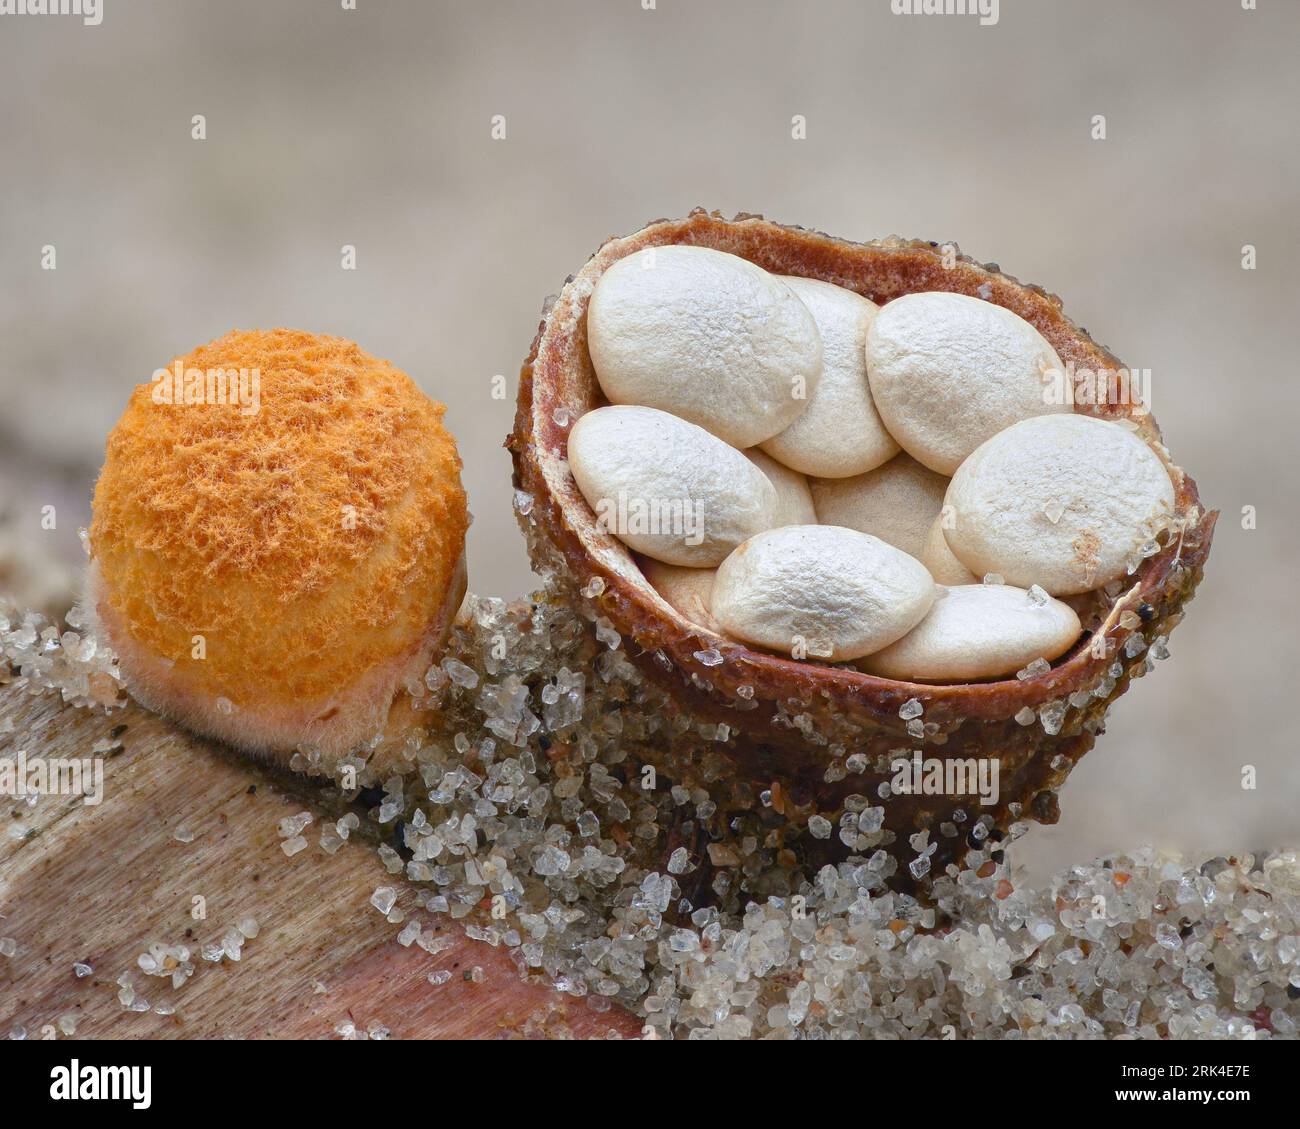 Close-up of an orange fungus that looks like a birds’ nest filled with white disc-shaped eggs (Common bird's nest fungus, Crucibulum laeve) Stock Photo